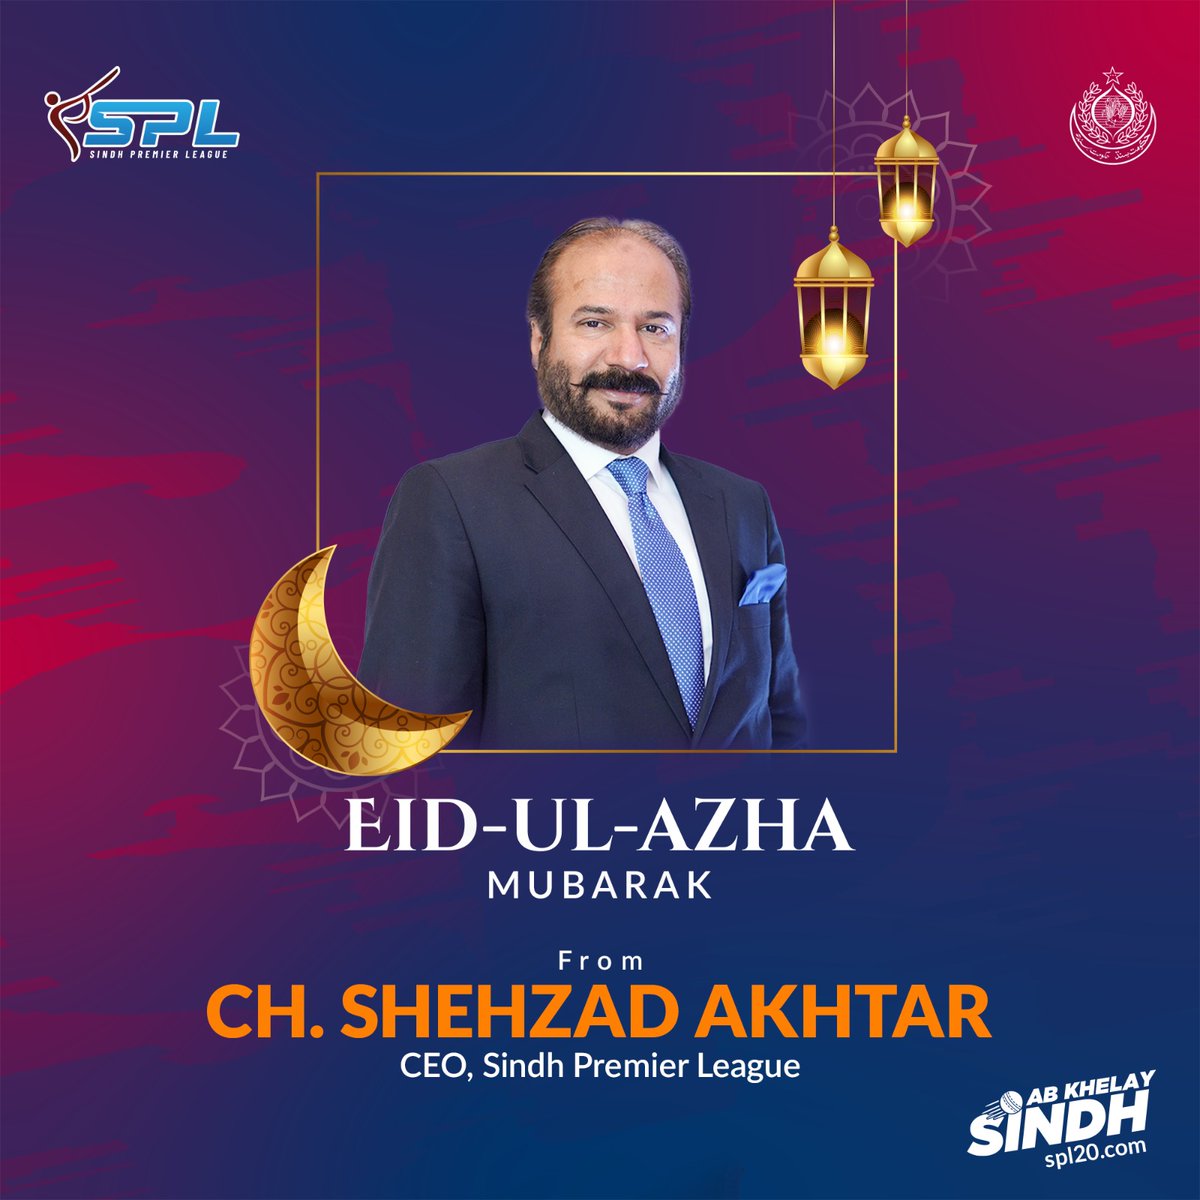 I wish you all a very happy Eid-ul-Azha and the very best for you and your families.

#spl #GovtofSindh #shahidafridi #abkhelaysindh #CuttingEdgeSport #SindhPremierLeague #AlHayatGroup #TPT #ZGroup #GFSBuildersandDevelopers #EidUlAzha #ShehazdAkhtar